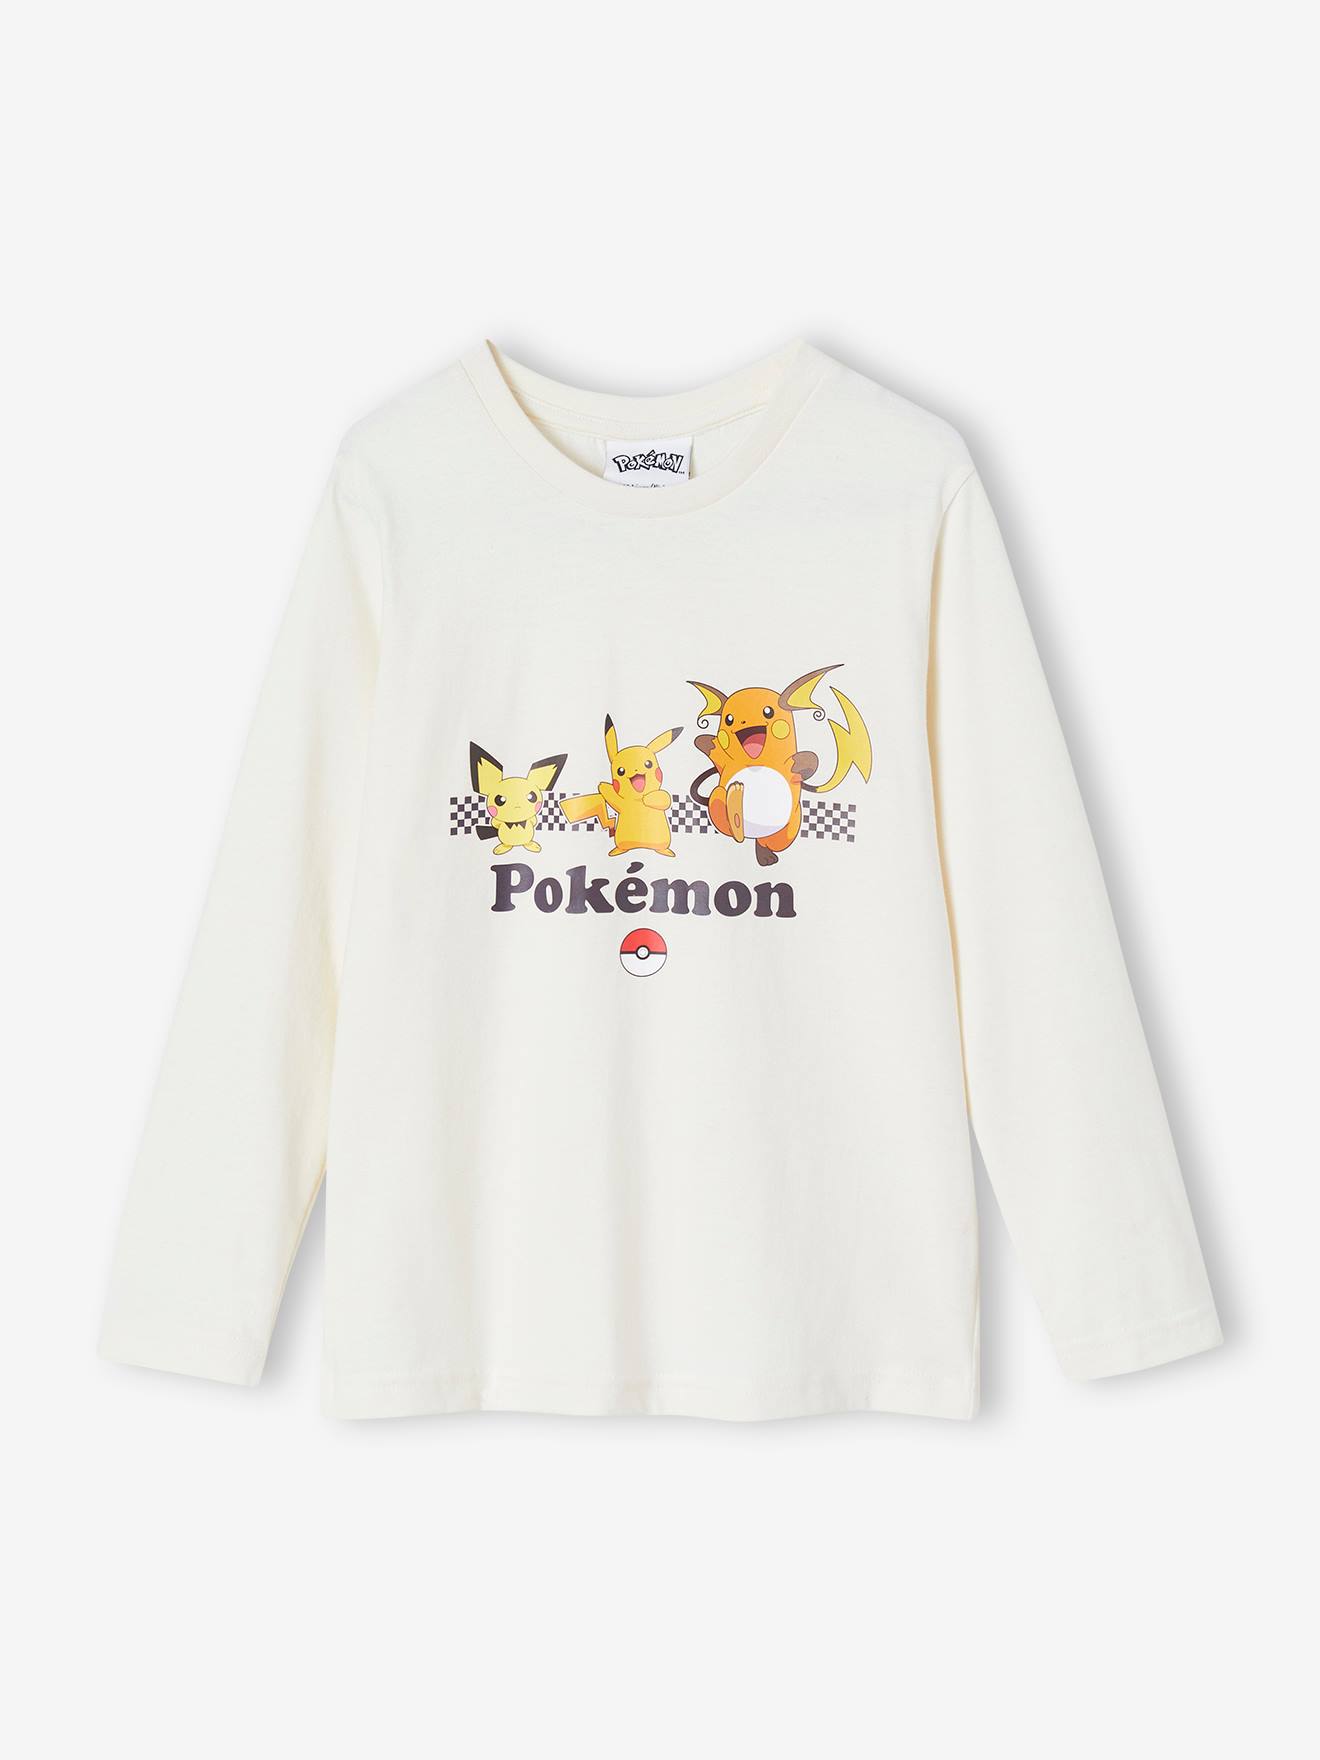 Pokémon sweatshirt Nike (pikachu)  Long sleeve tshirt men, Mens tops, Pokemon  sweatshirt